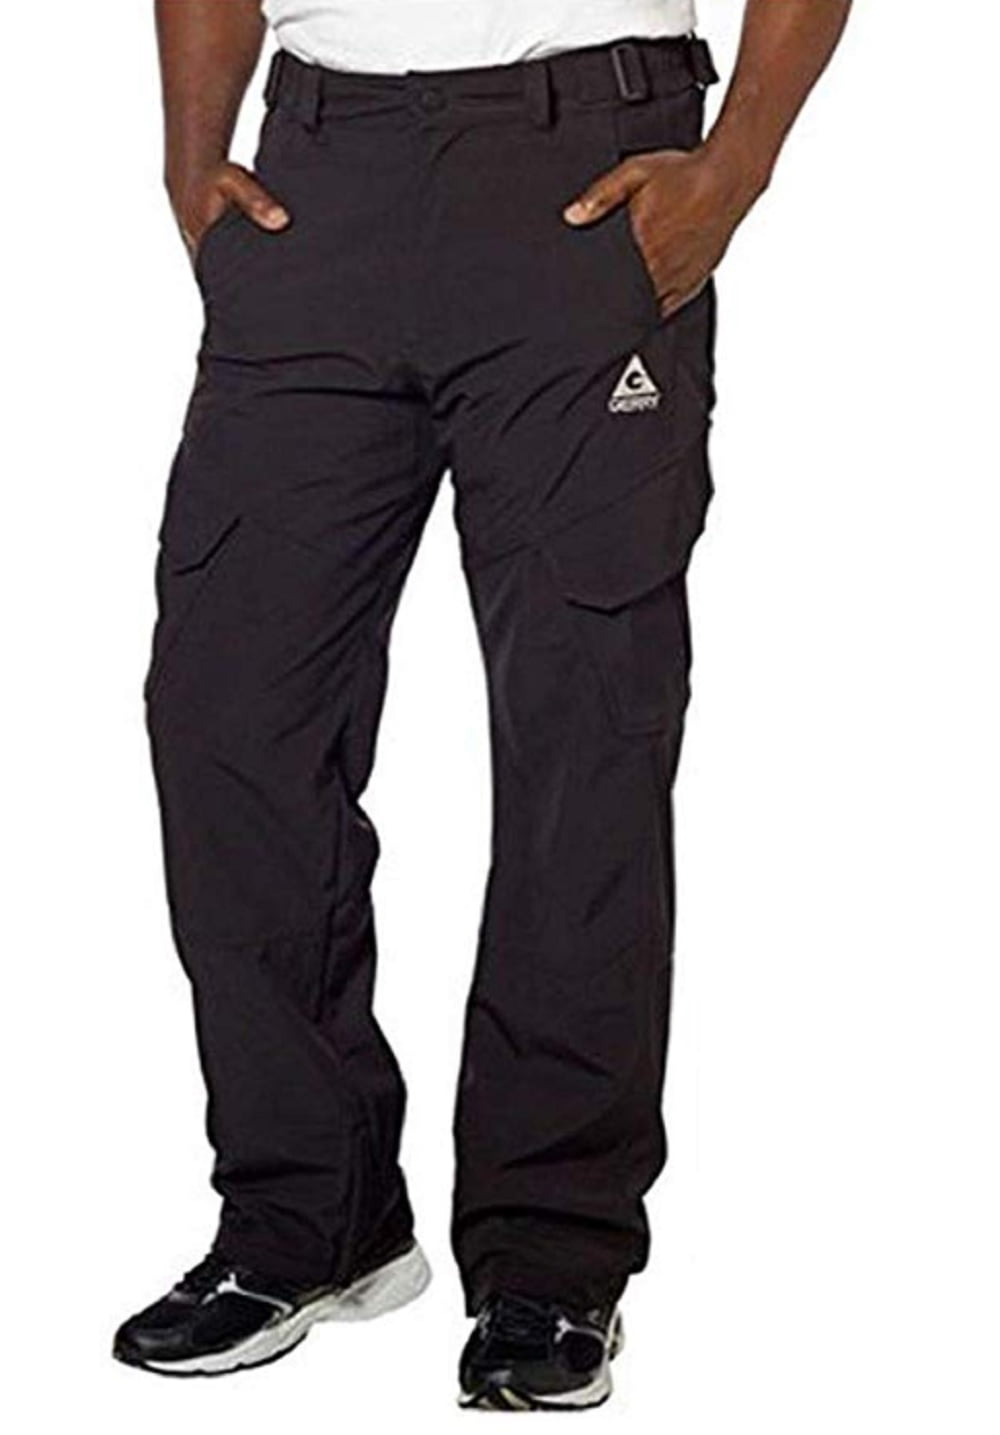 Black Details about   Arctix Men's Snow Sports Cargo Pants S Small Regular 